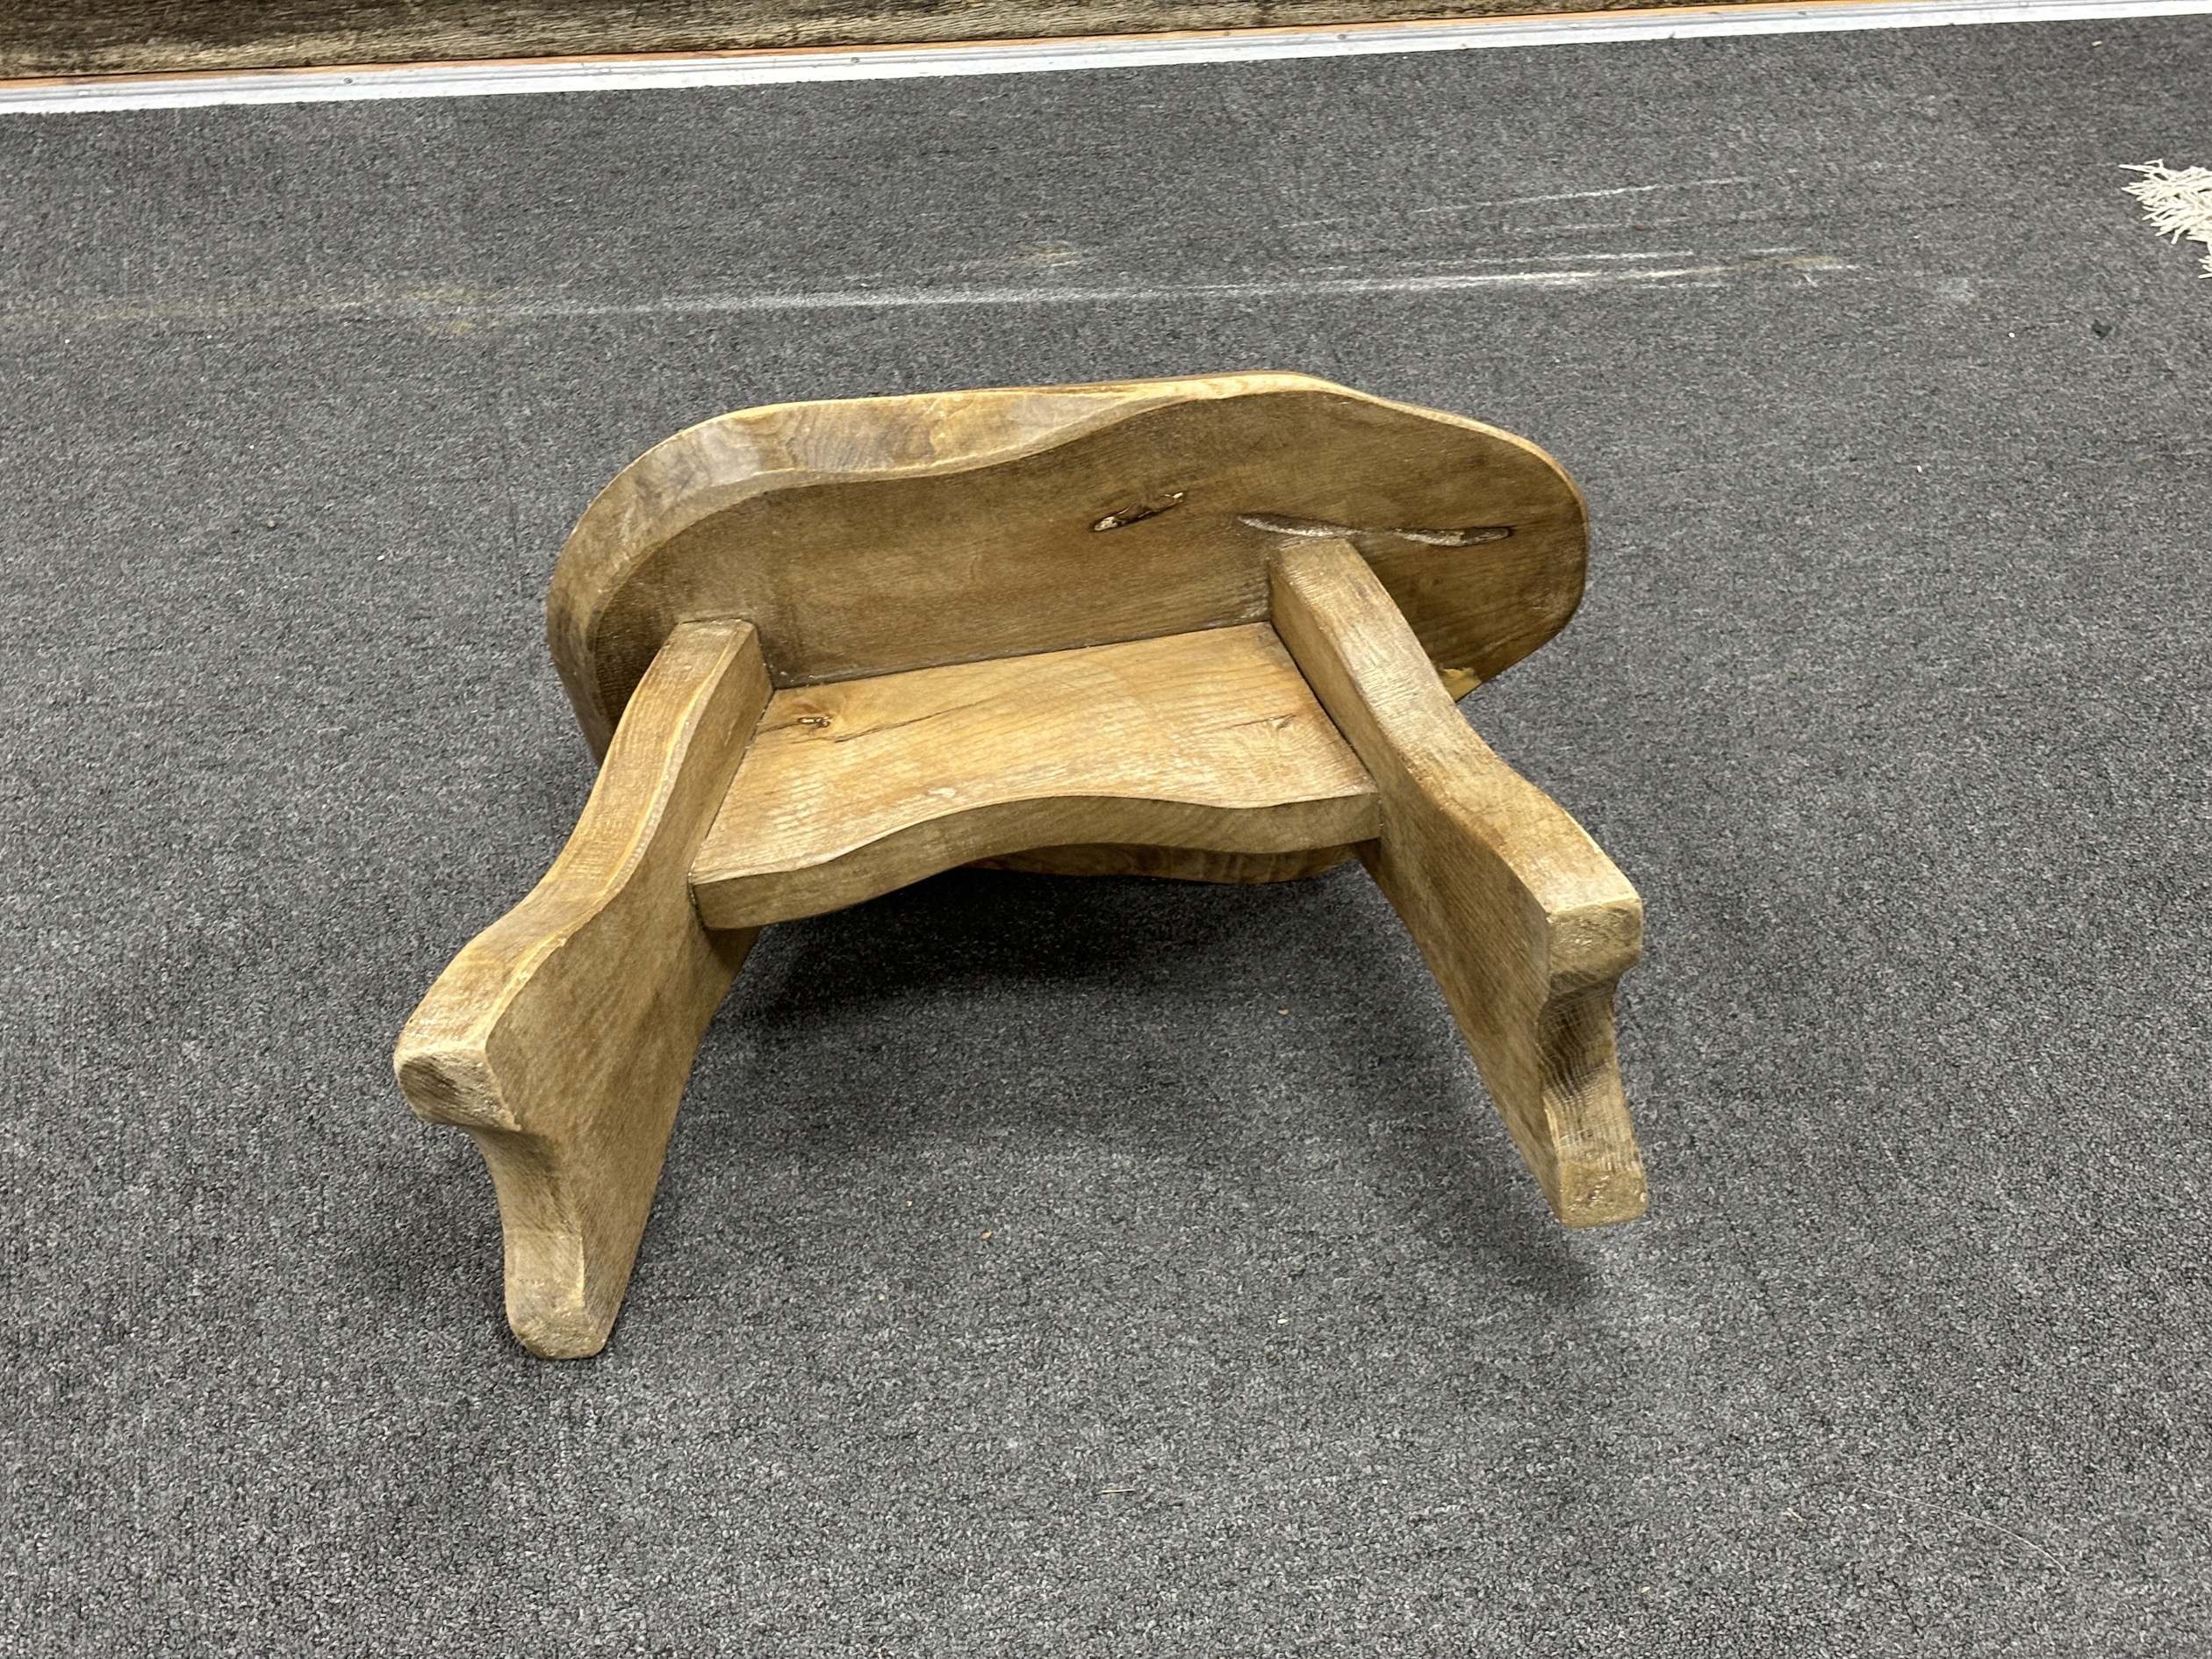 A provincial oak stool, width 48cm, depth 30cm, height 32cm